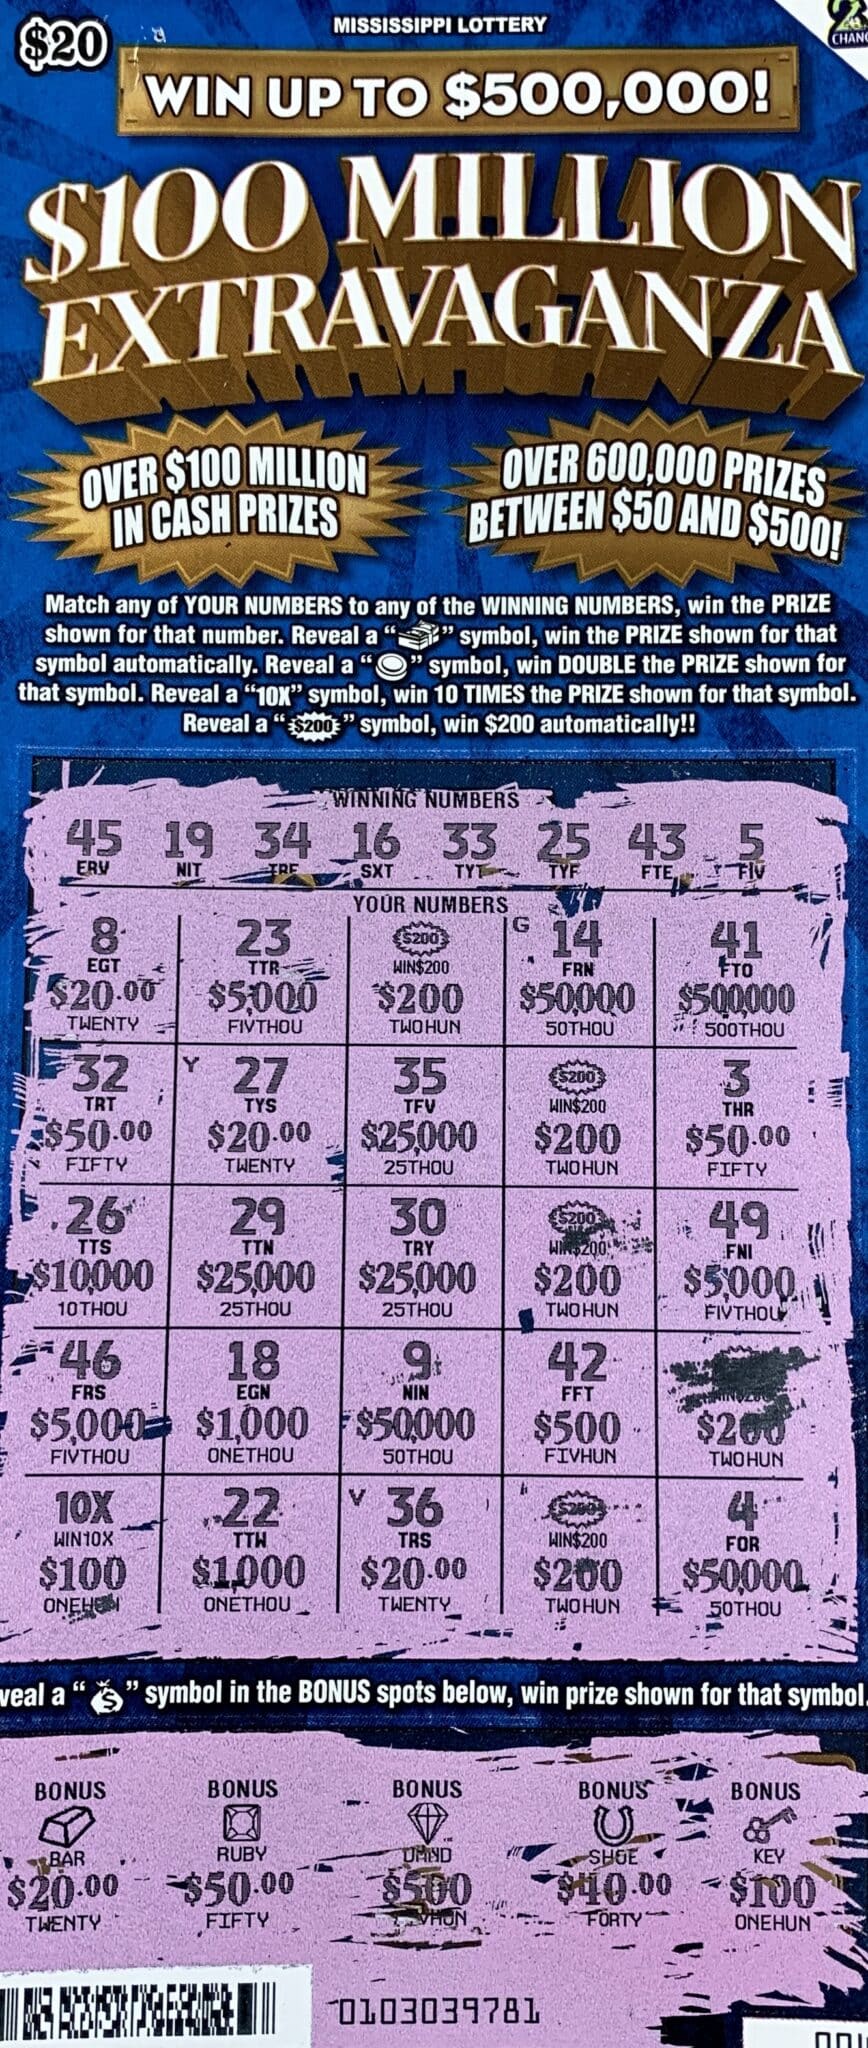 Bolivar County Woman Wins $2k! - Mississippi Lottery